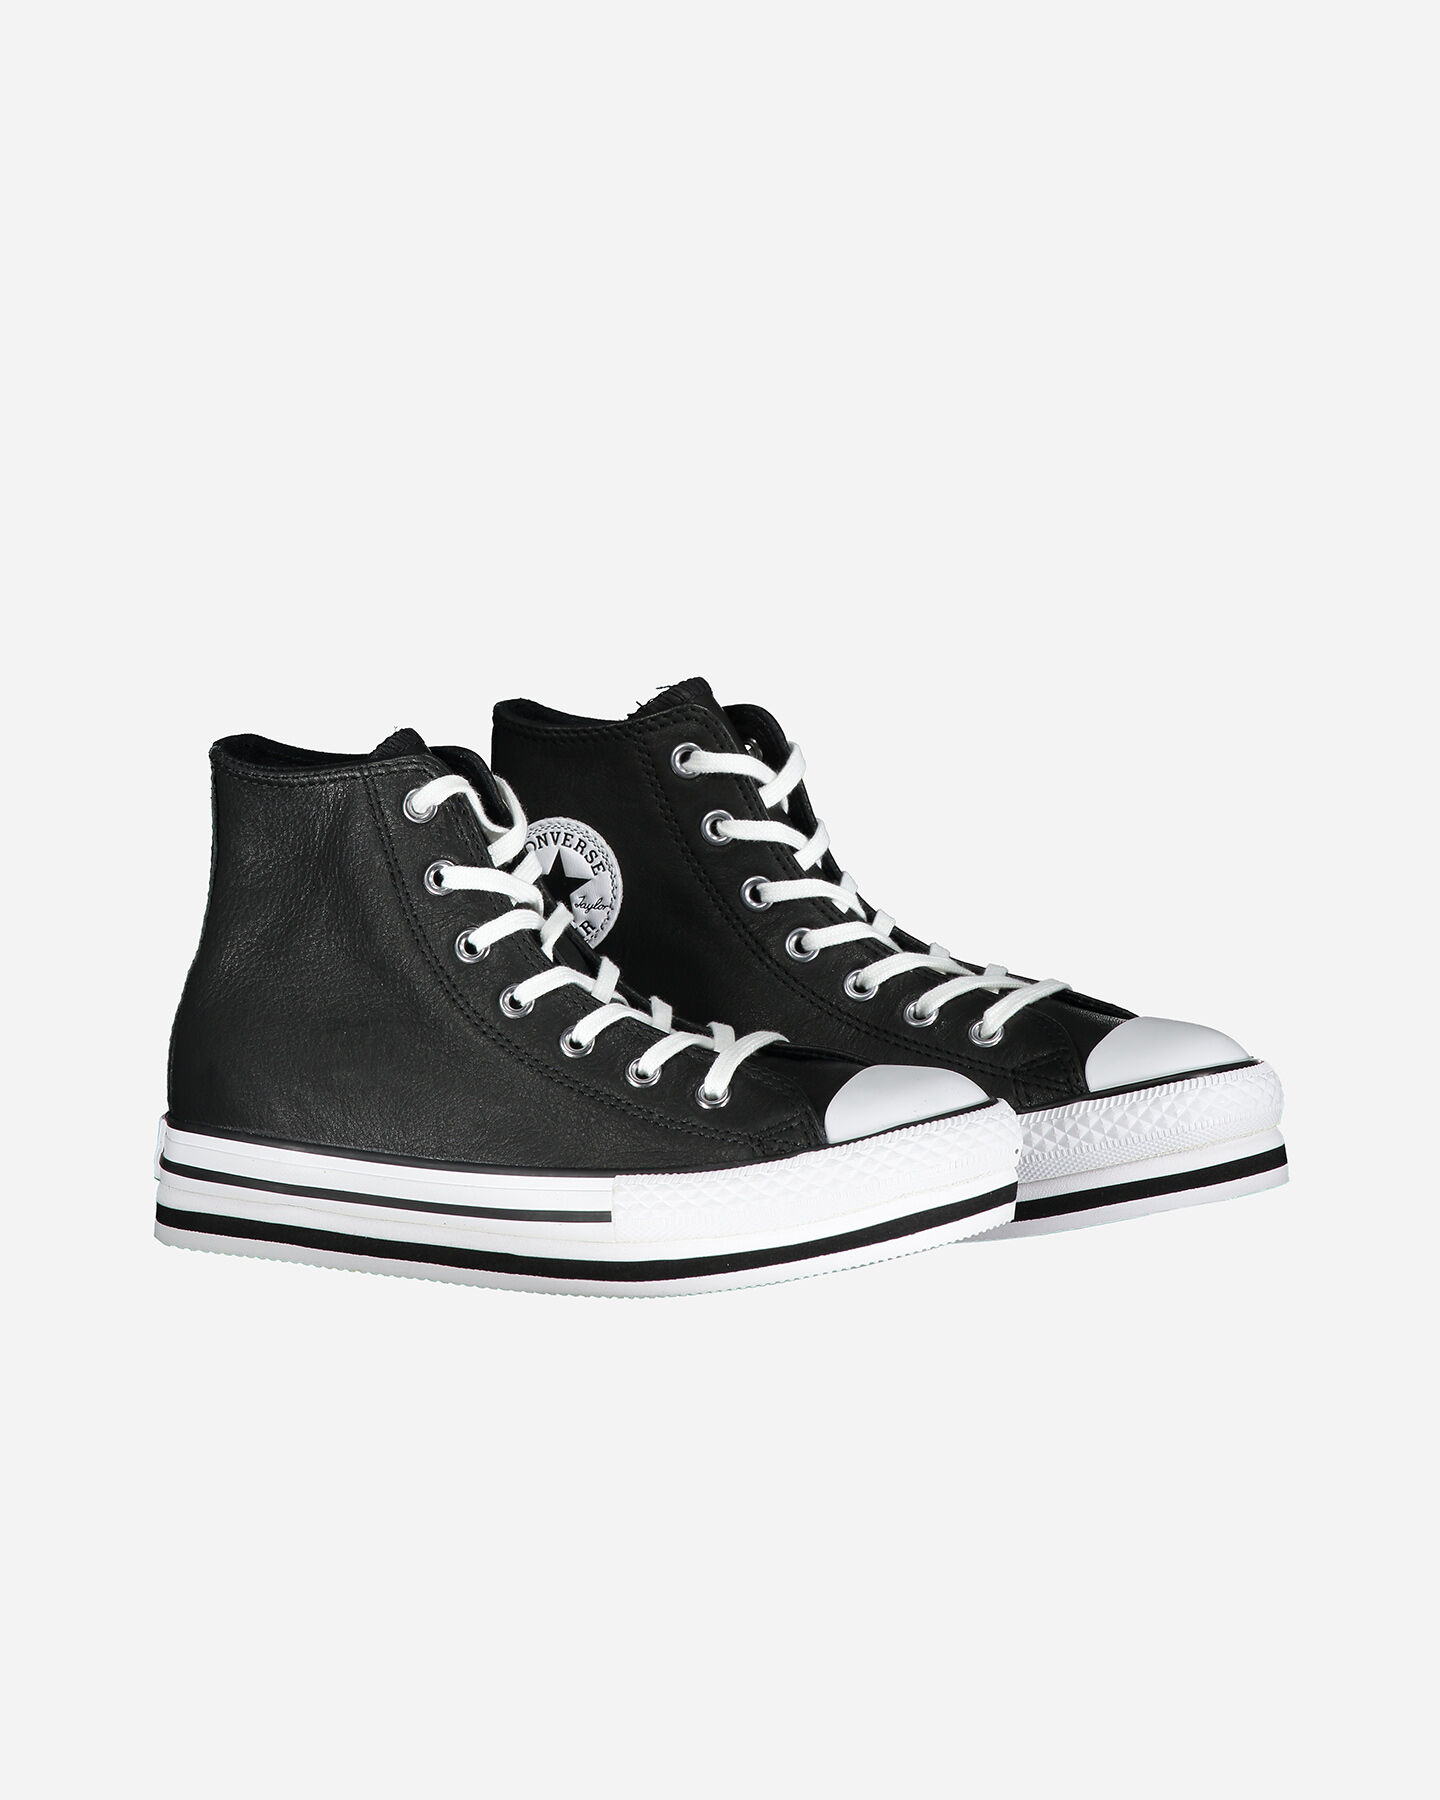  Scarpe sneakers CONVERSE CHUCK TAYLOR ALL STAR PLATFORM EVA HIGH PS JR S4070138|1|1 scatto 1